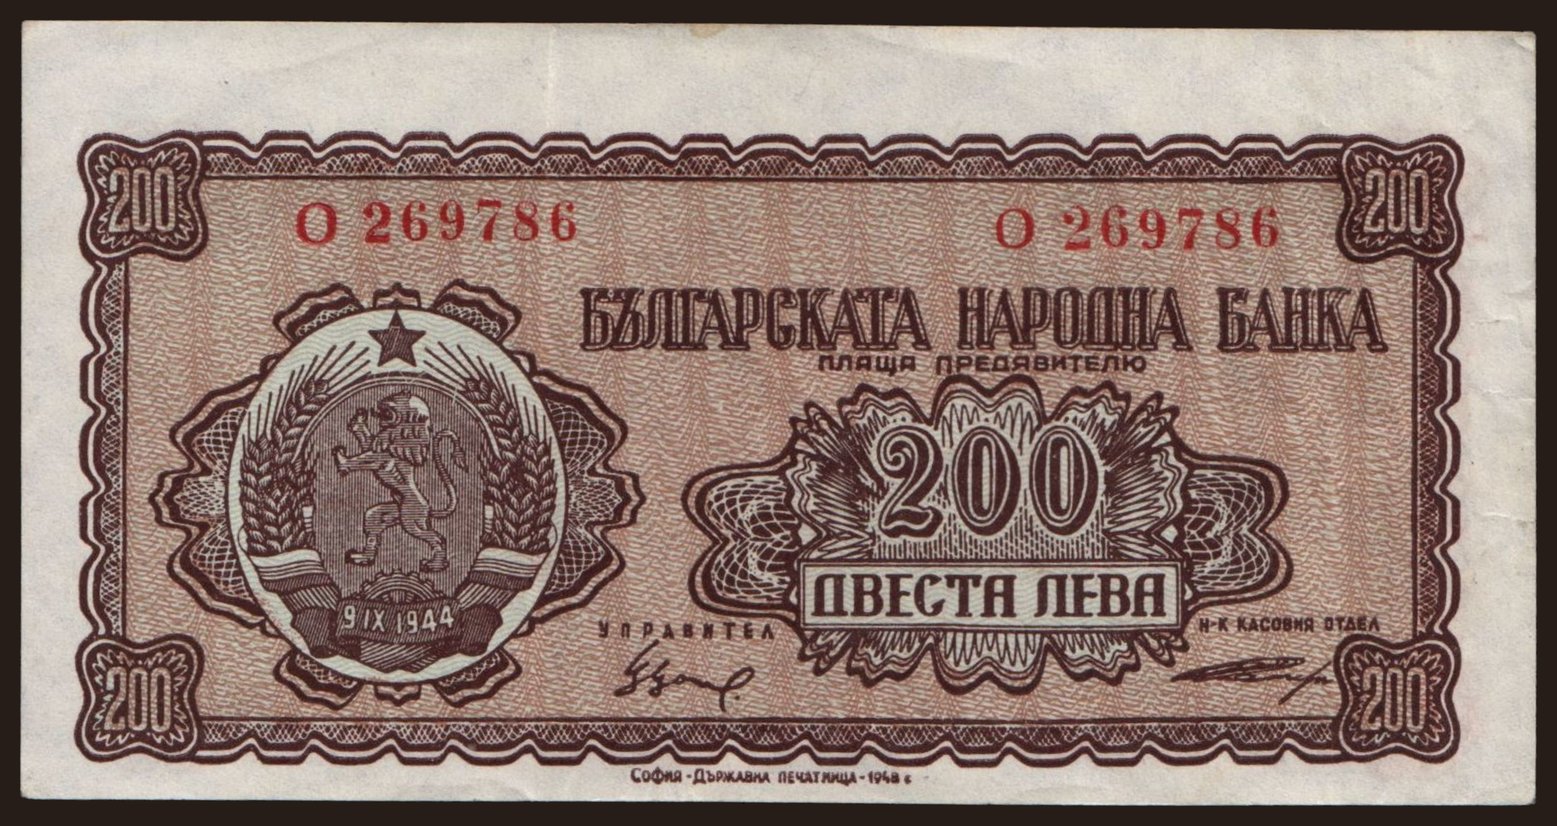 200 leva, 1948